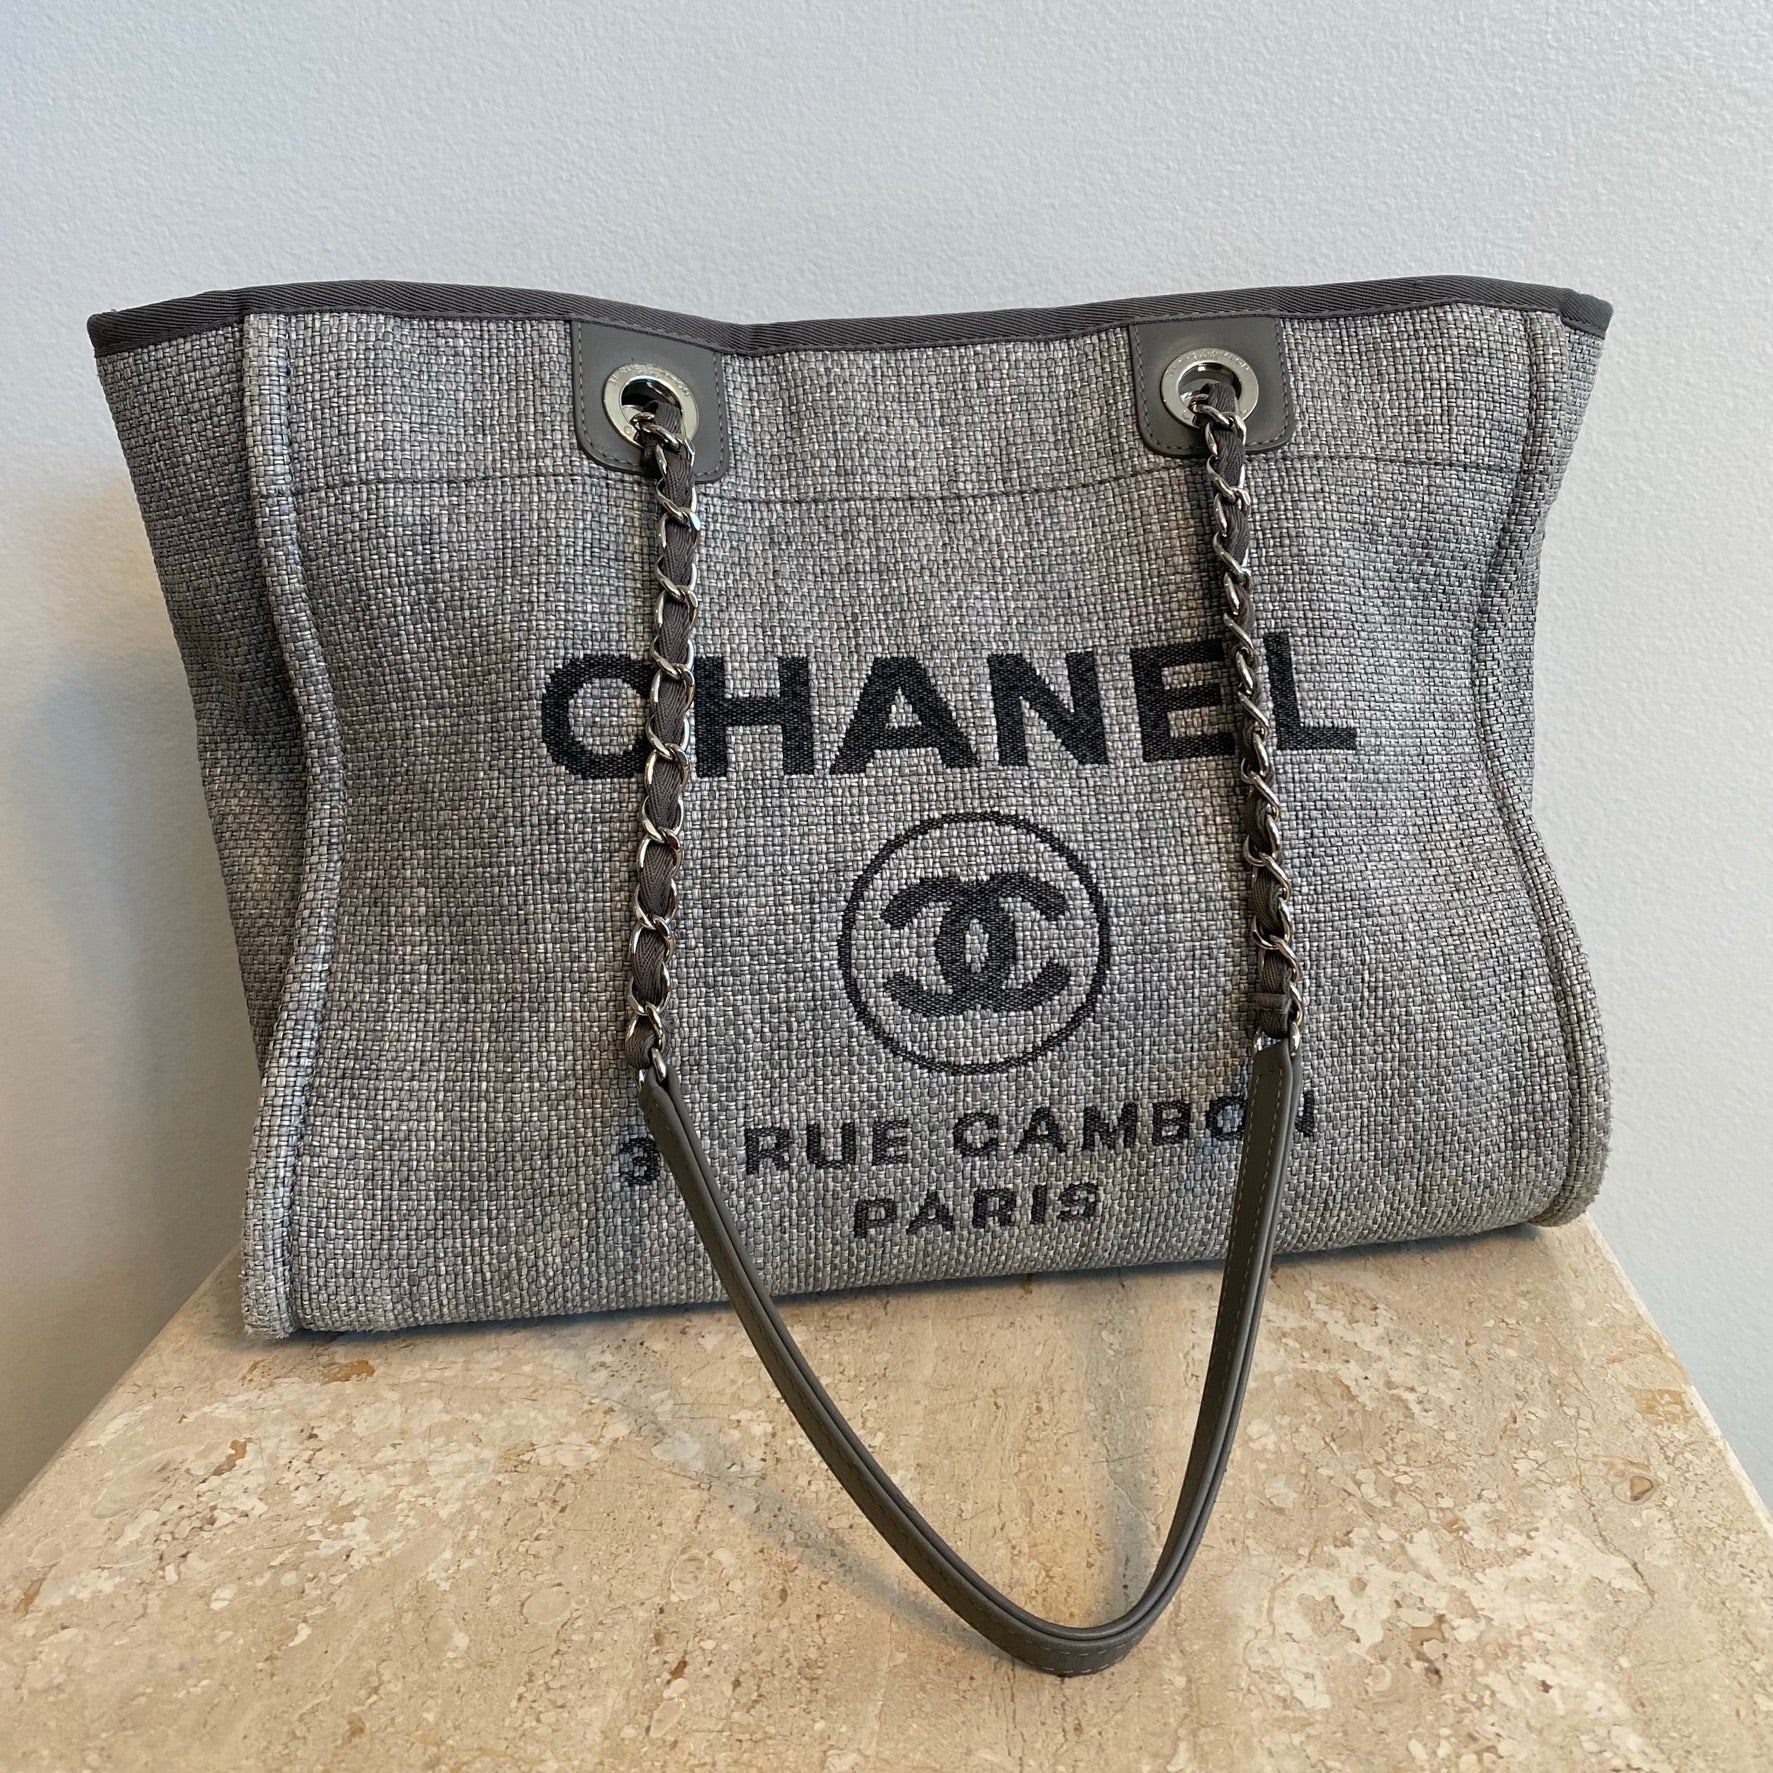 ORDER Chanel shopping bag